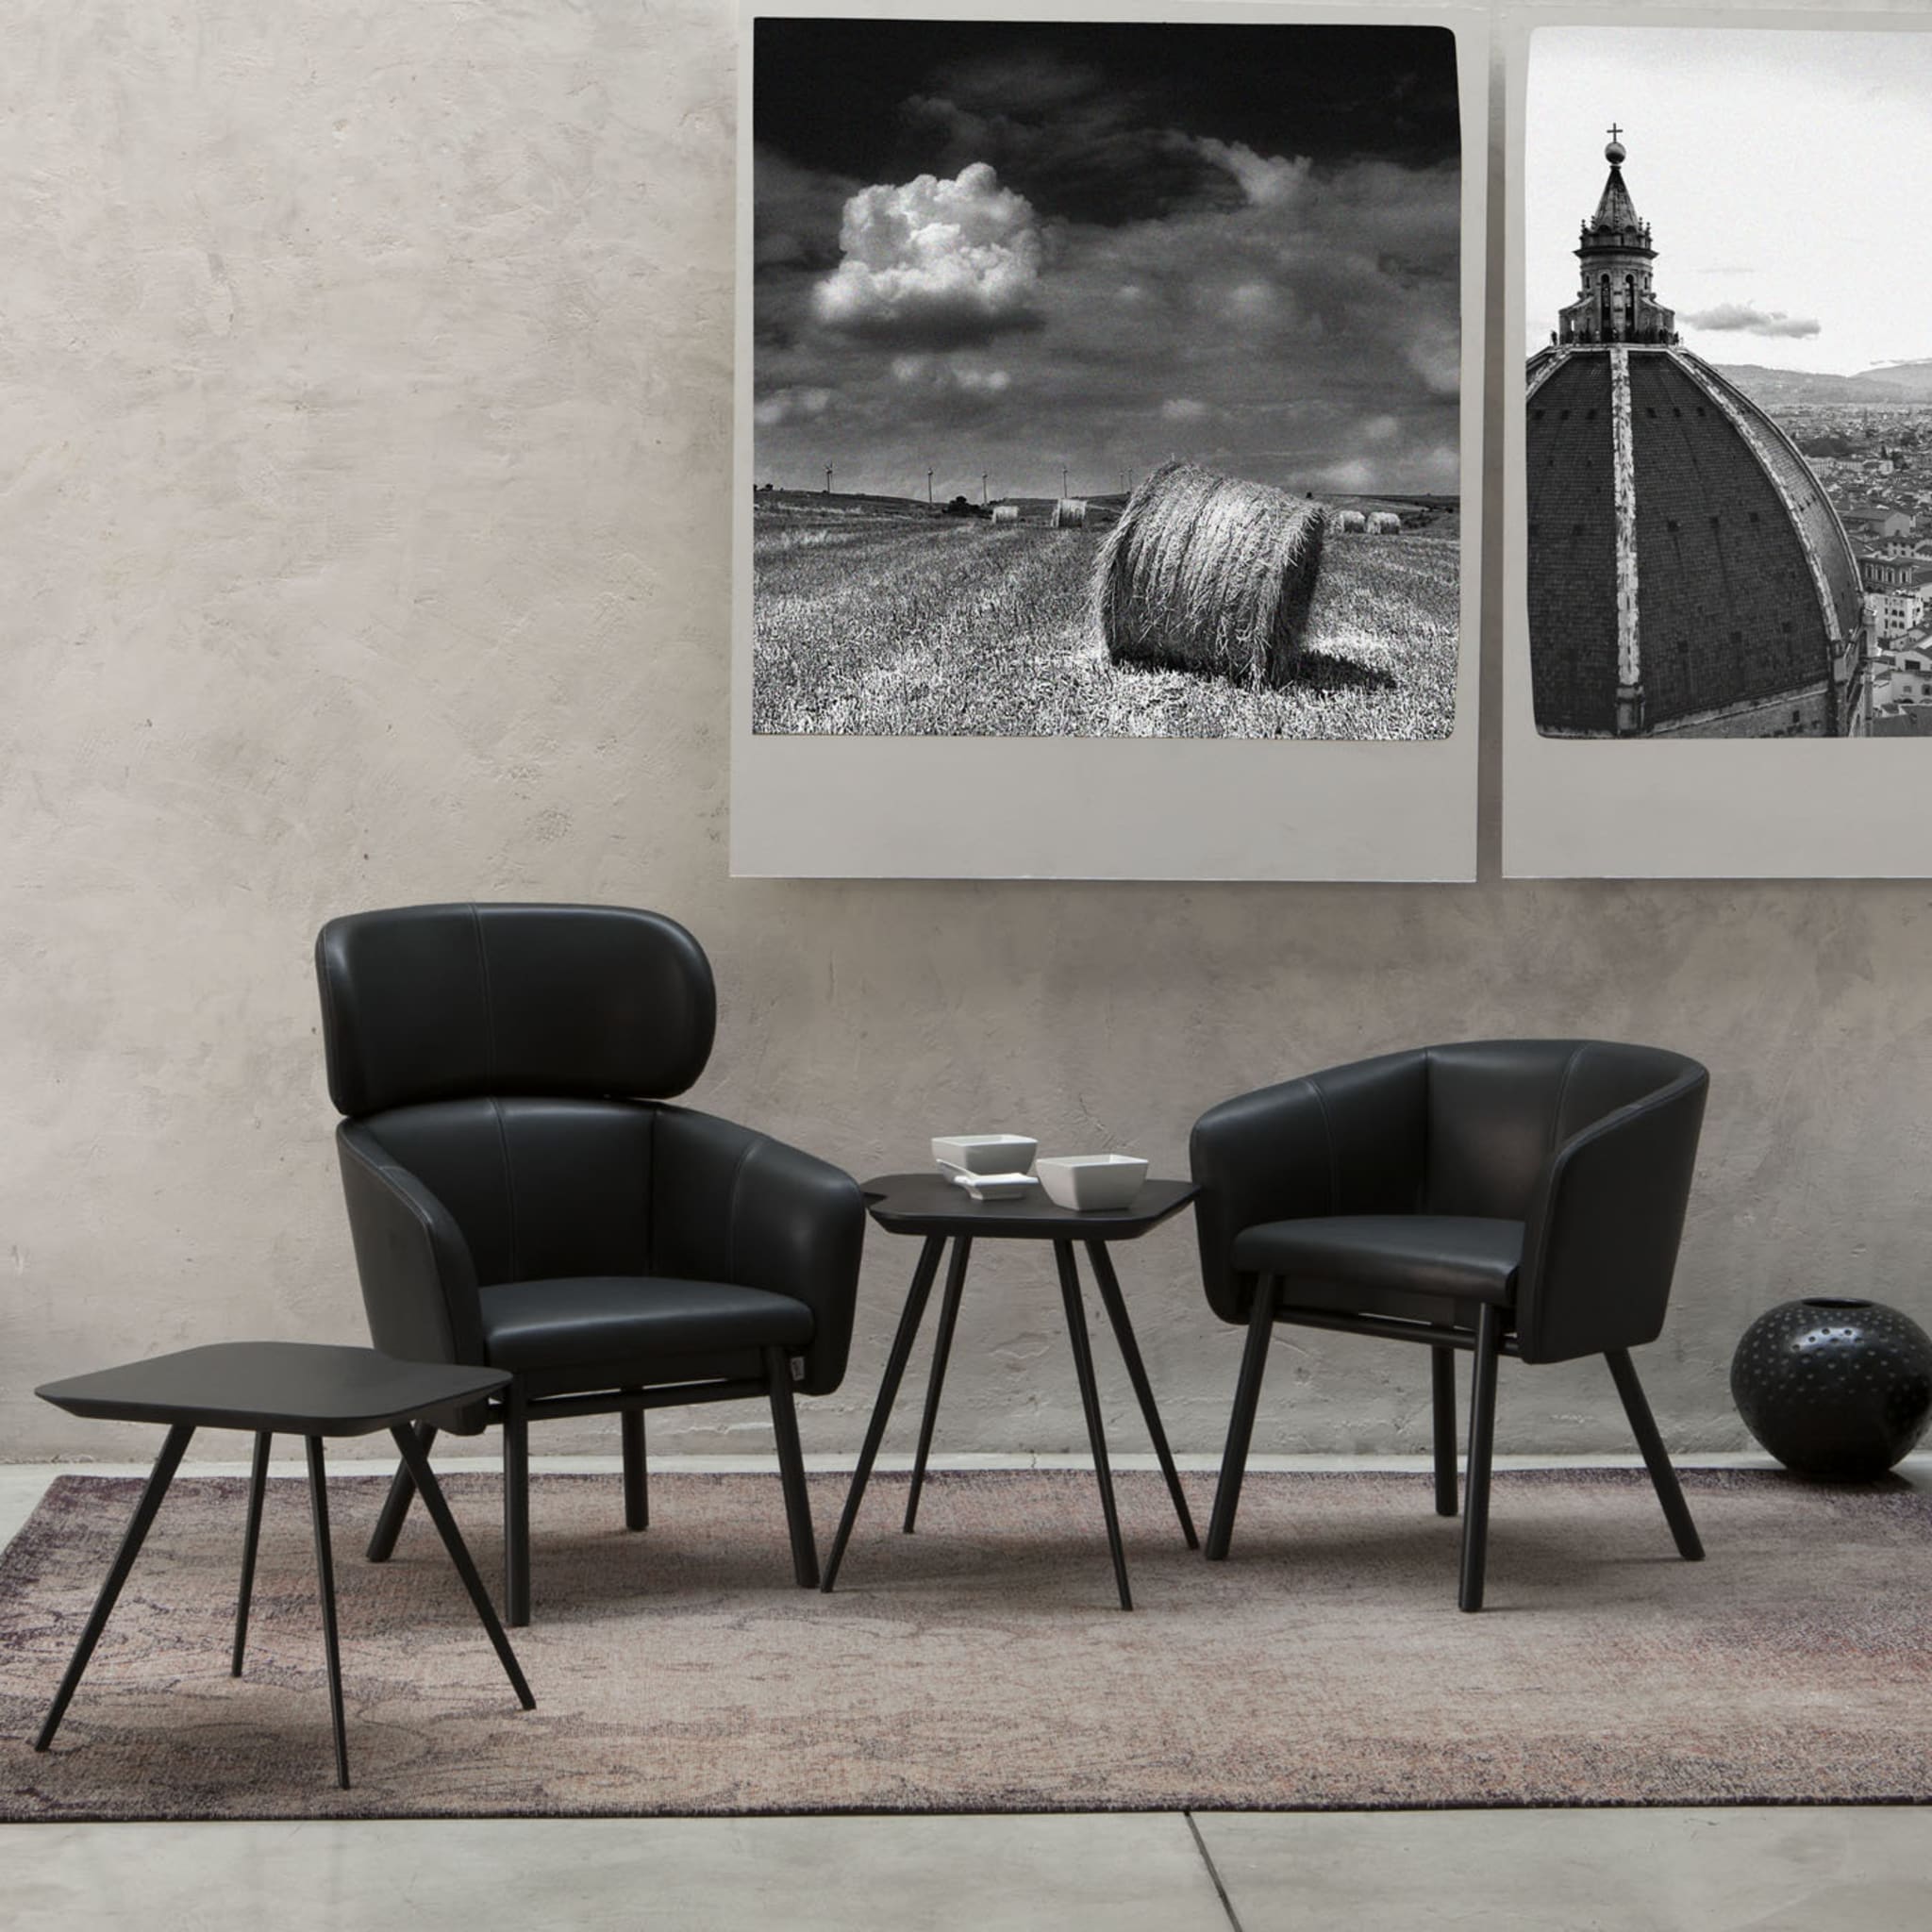 Balù Black Chair By Emilio Nanni - Alternative view 1